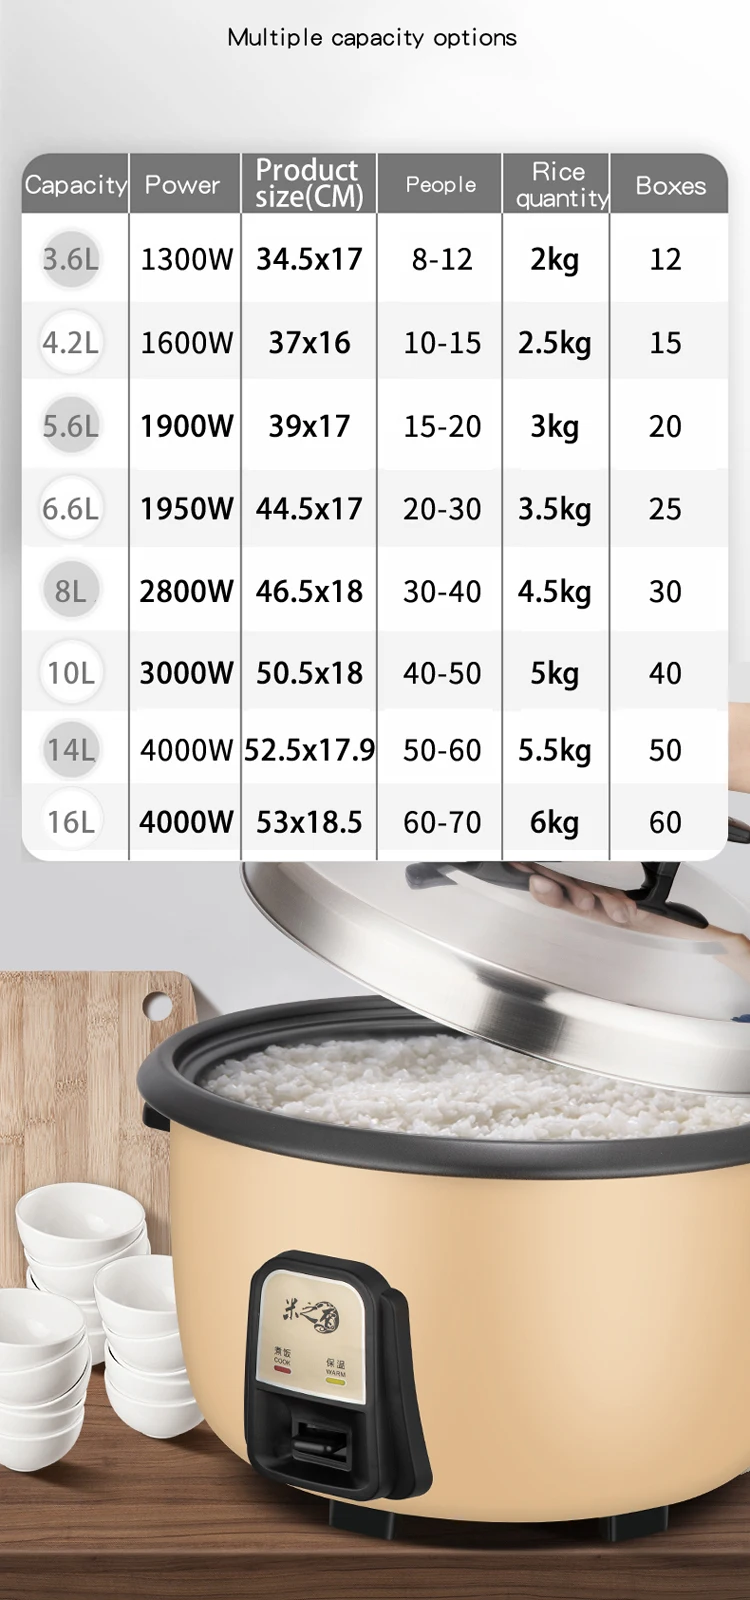 3.6 Litre 1300W SQ Professional Ltd Electric Automatic Rice Cooker 